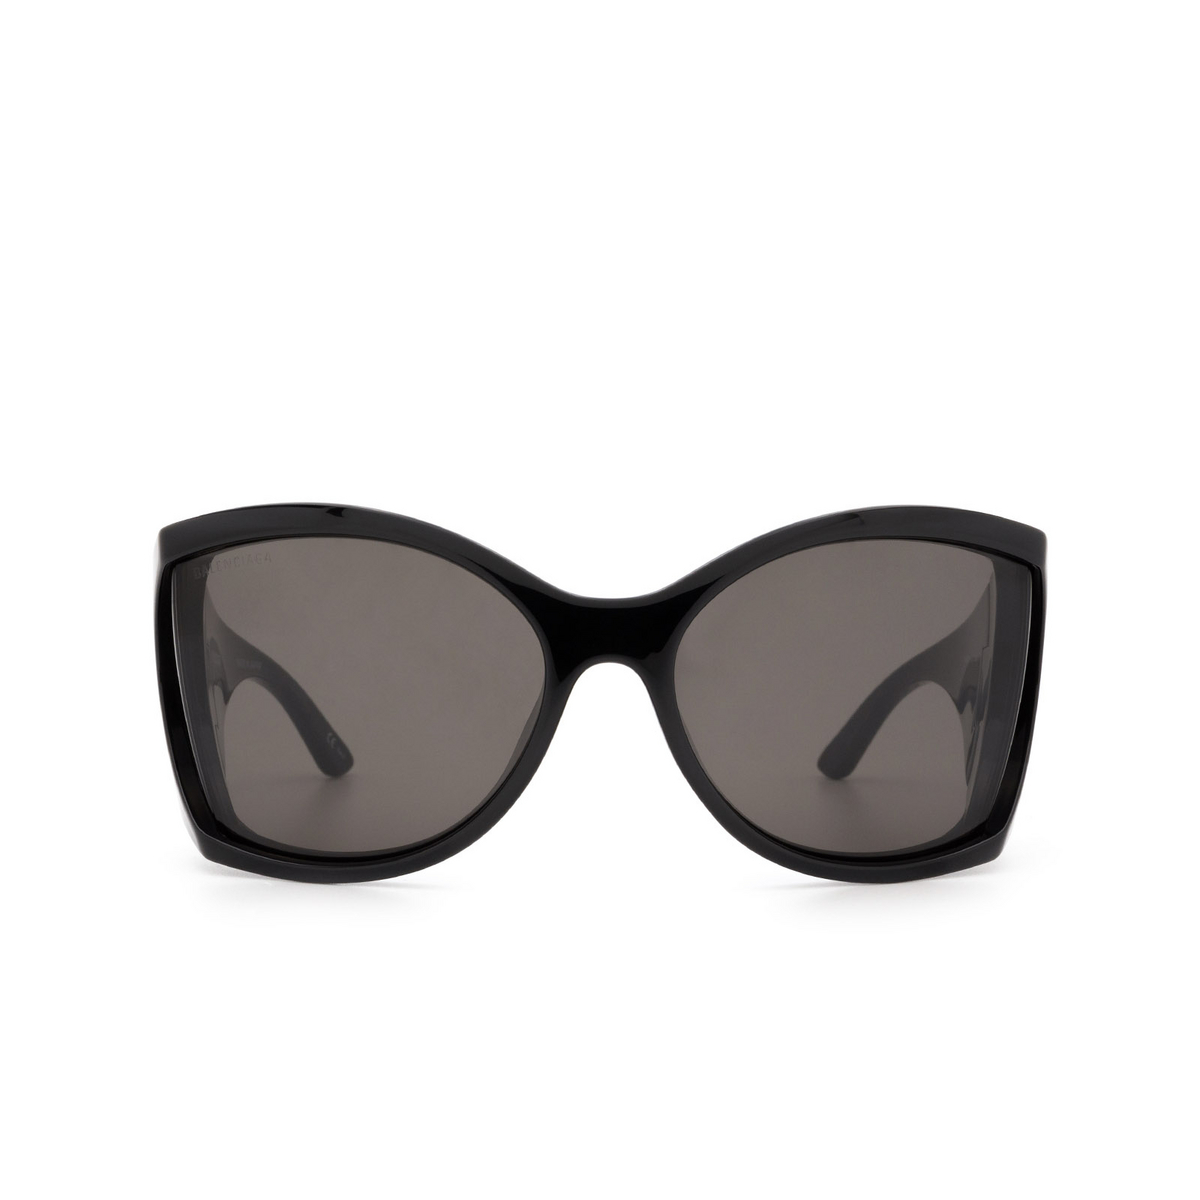 Balenciaga® Sunglasses: BB0154S color Black 001 - front view.